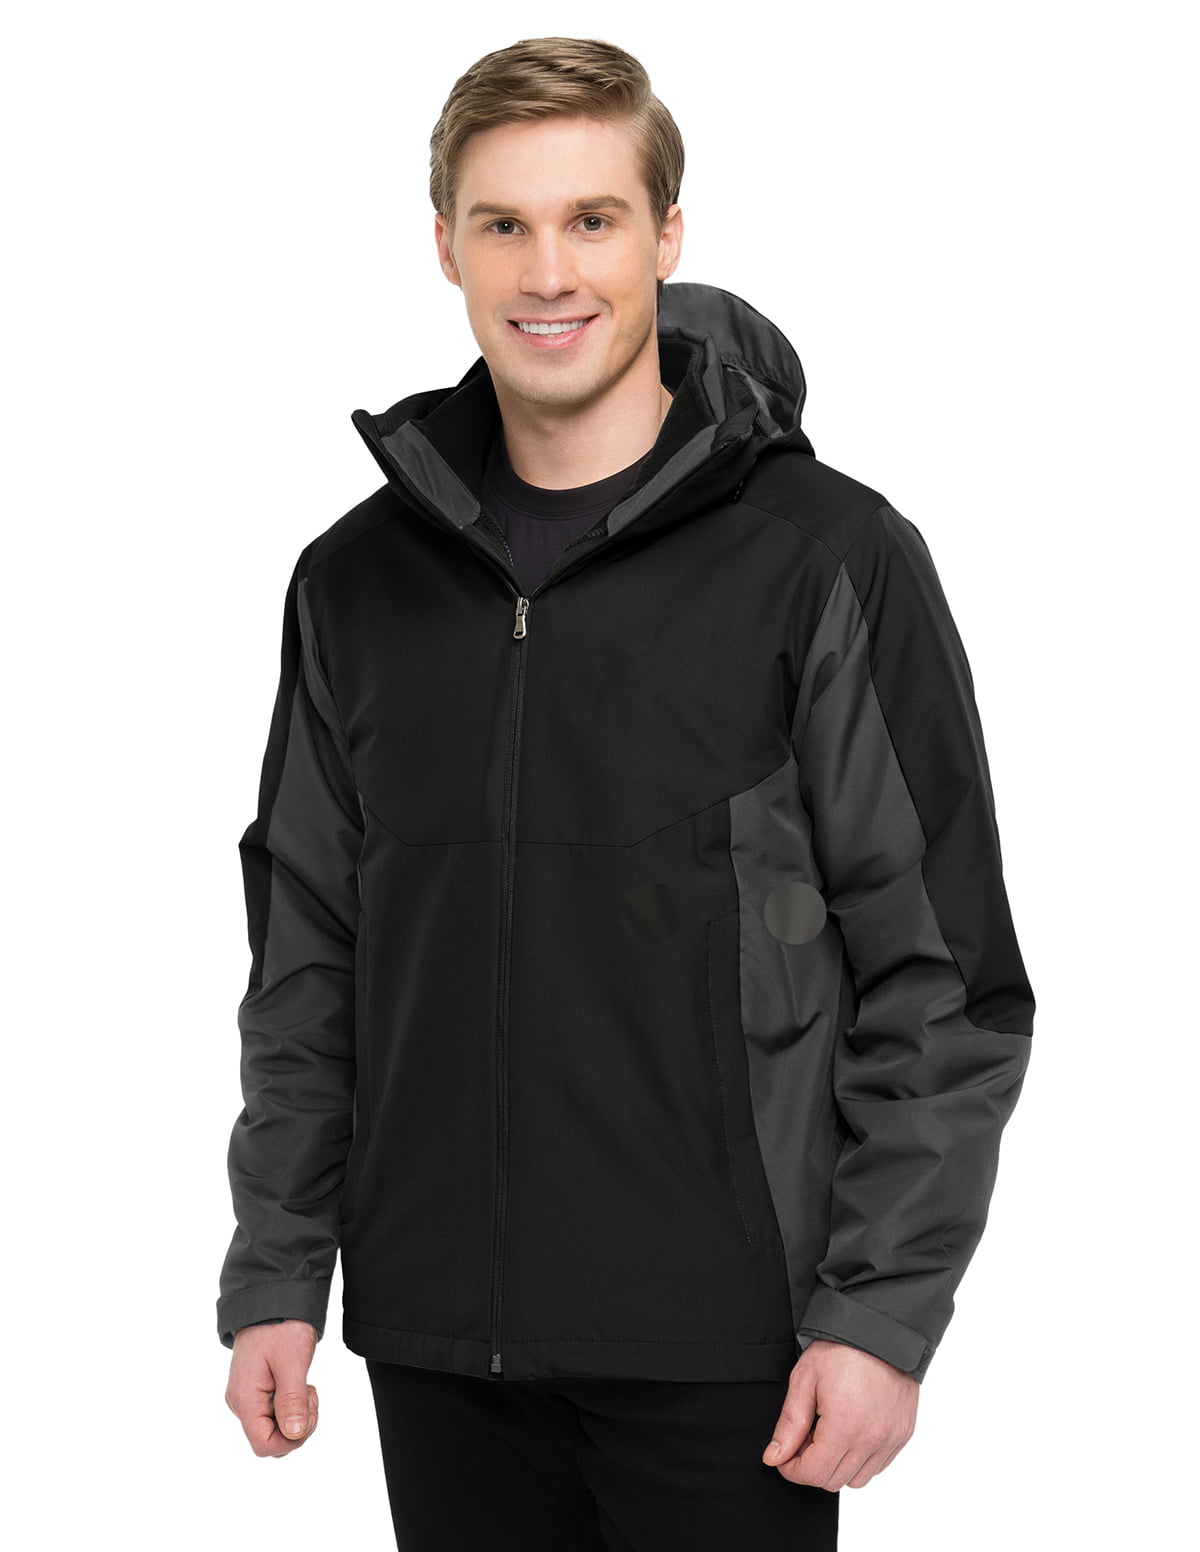 Tri-Mountain Men's 100% polyester 3-in-1 jacket - Walmart.com - Walmart.com